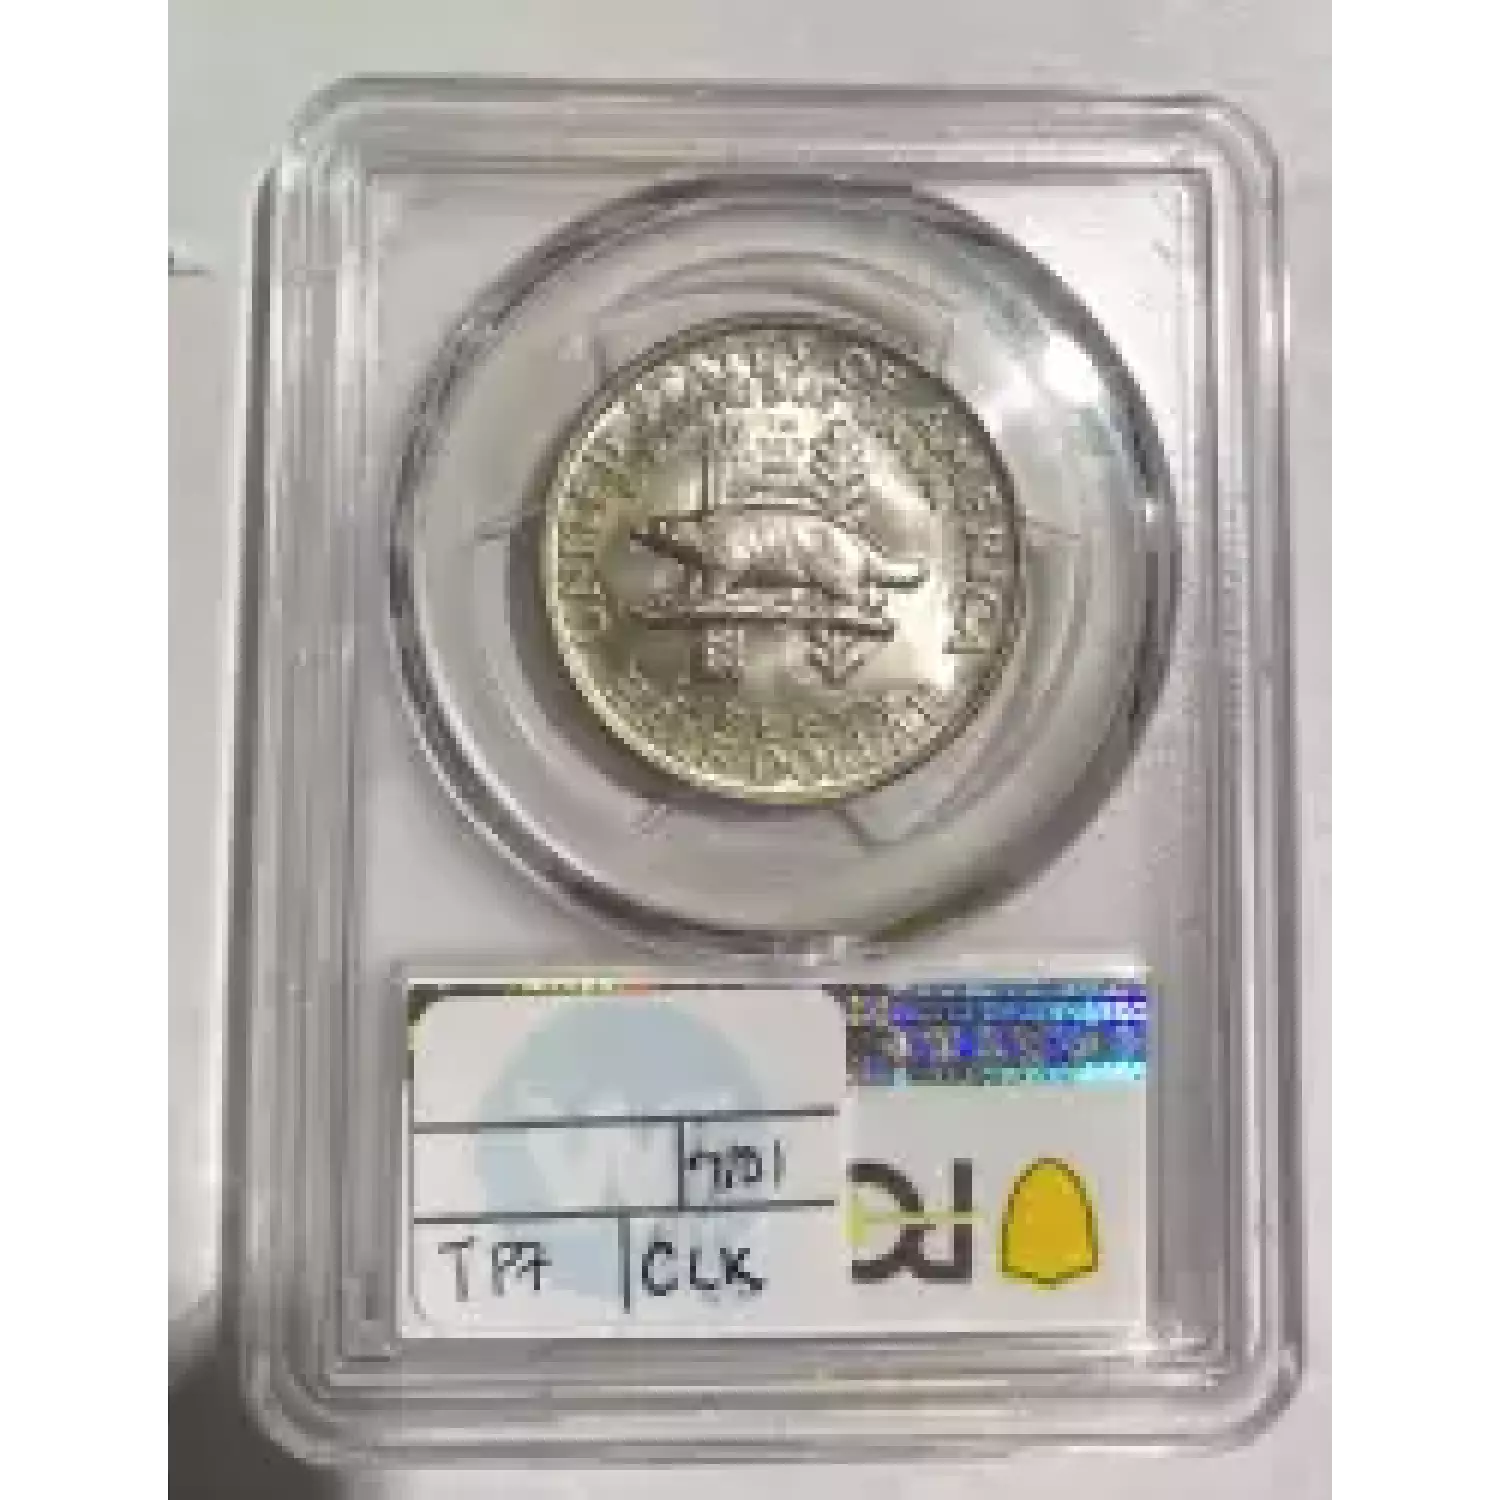 Classic Commemorative Silver--- Wisconsin Territorial Centennial 1936 -Silver- 0.5 Dollar (2)